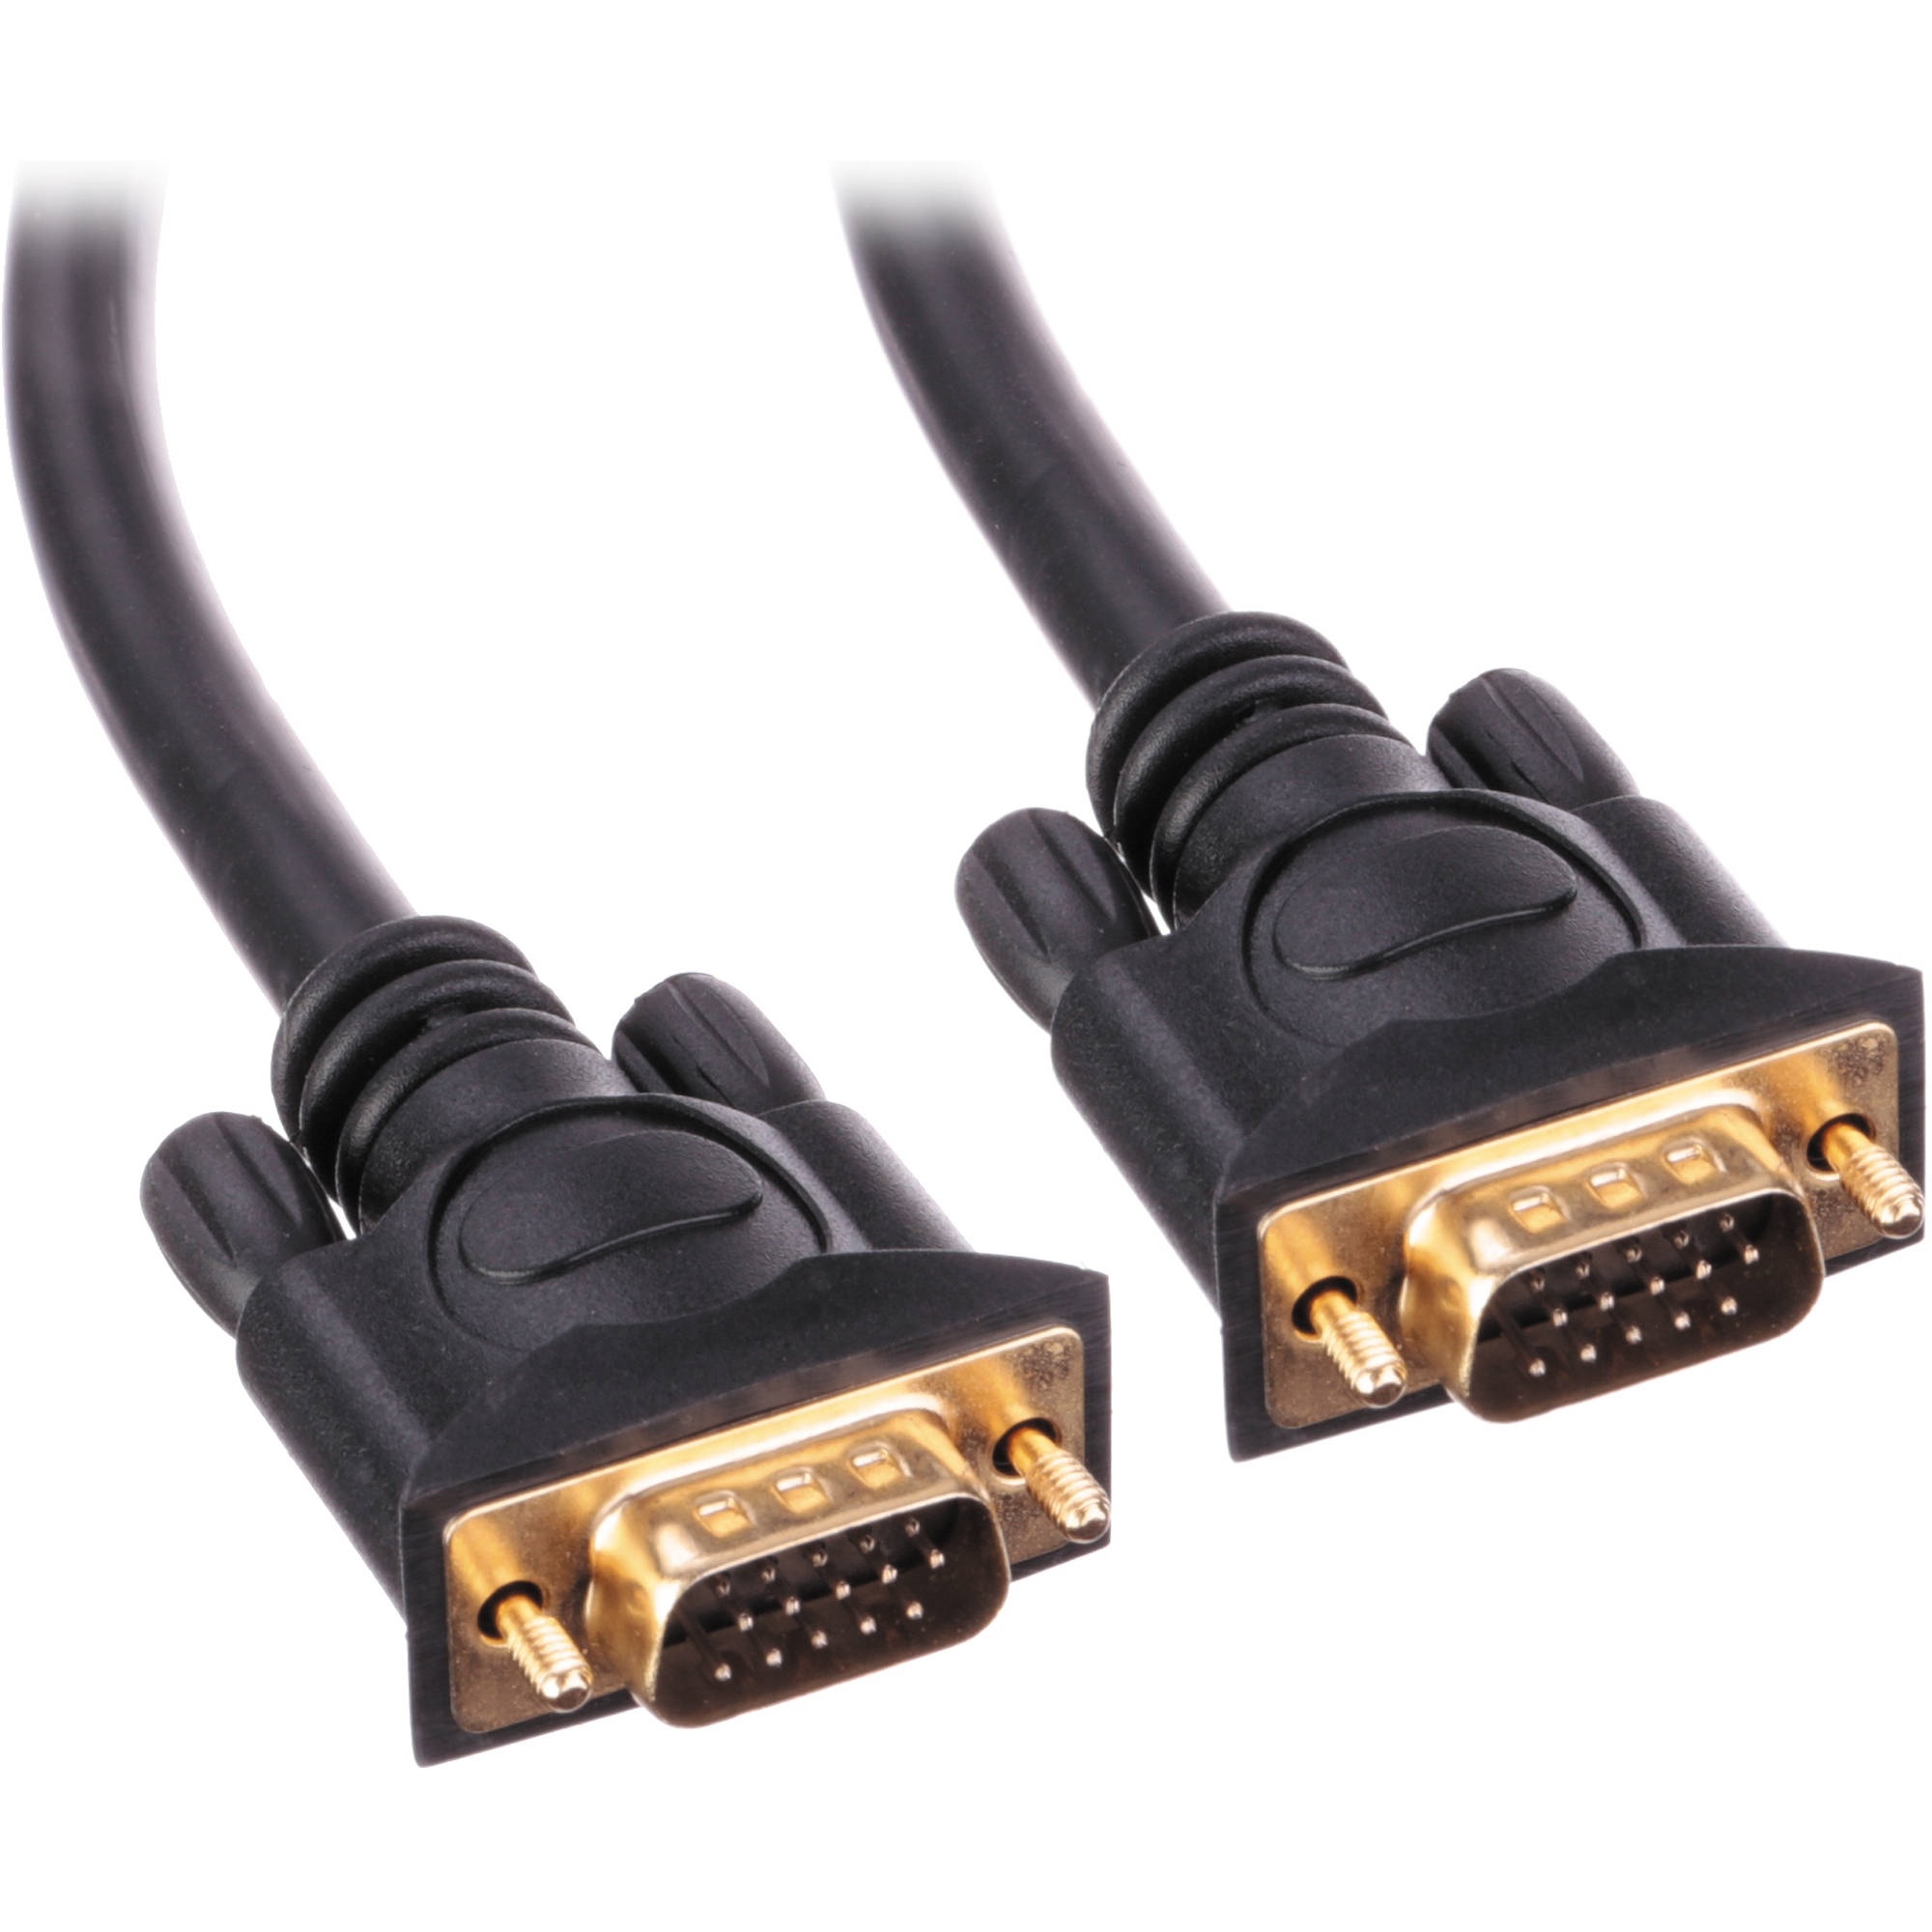 Pearstone 100' Premium VGA Male to Male Cable